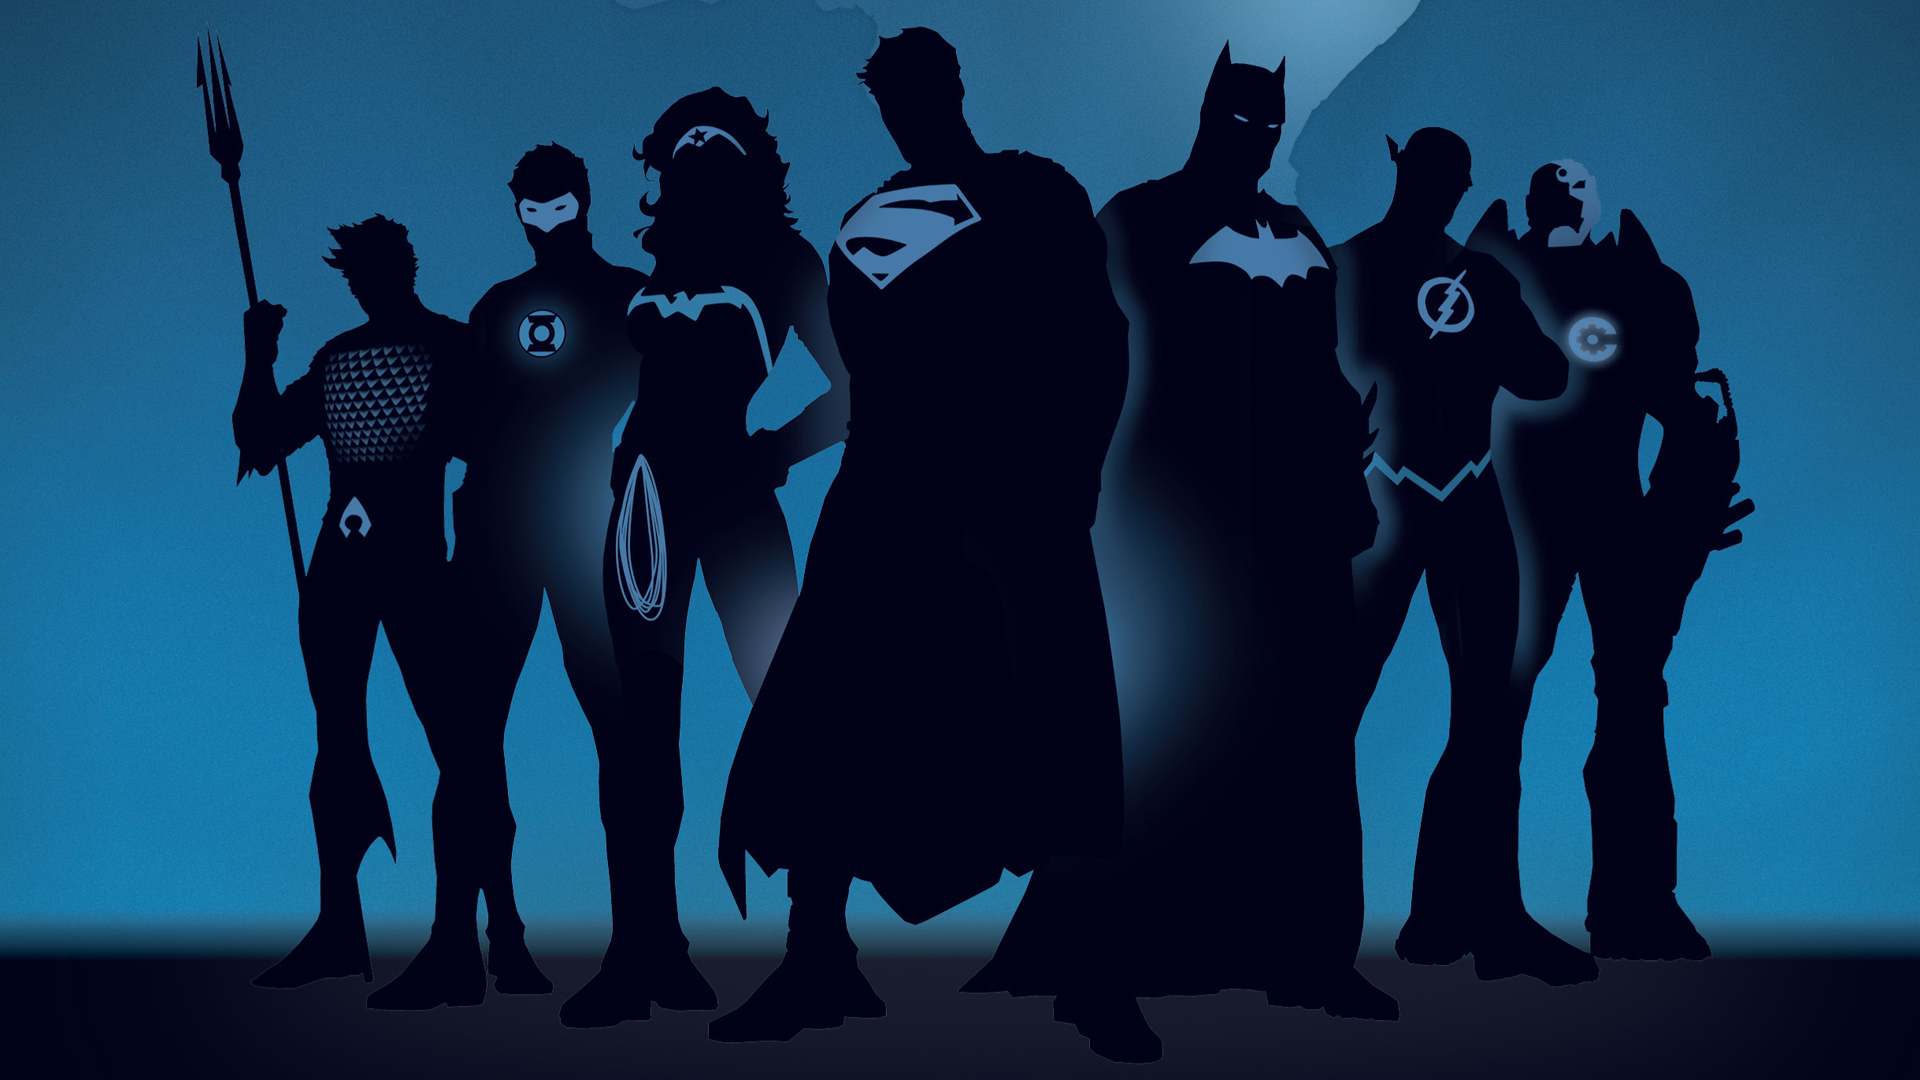 android superman, batman, bruce wayne, cyborg (dc comics), dc comics, comics, aquaman, the dark knight, diana prince, justice league, wonder woman, barry allen, flash, green lantern